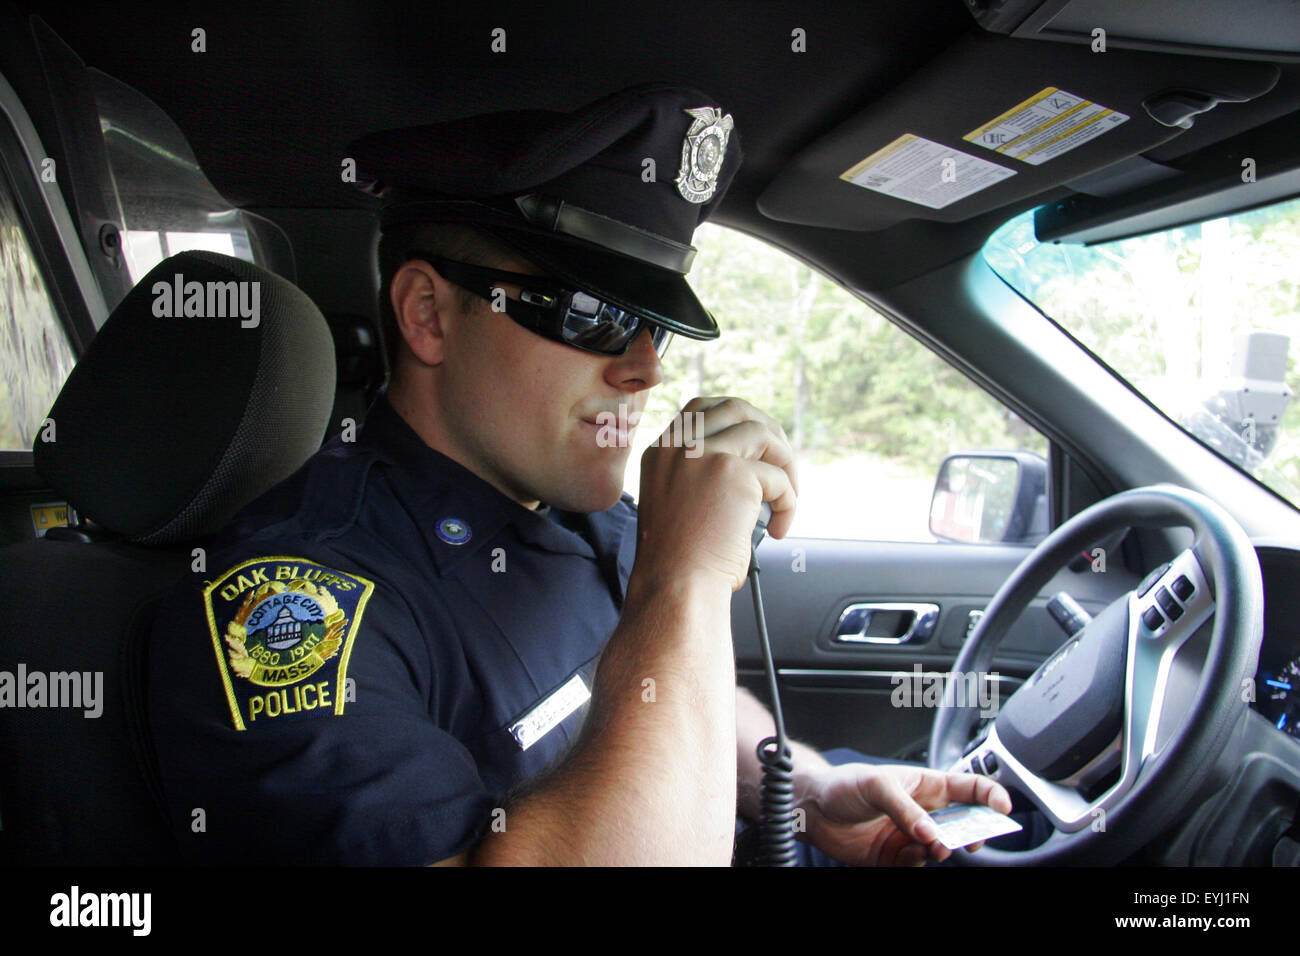 Police officer speaking on a police radio, Oak Bluffs, Massachusetts, USA Stock Photo